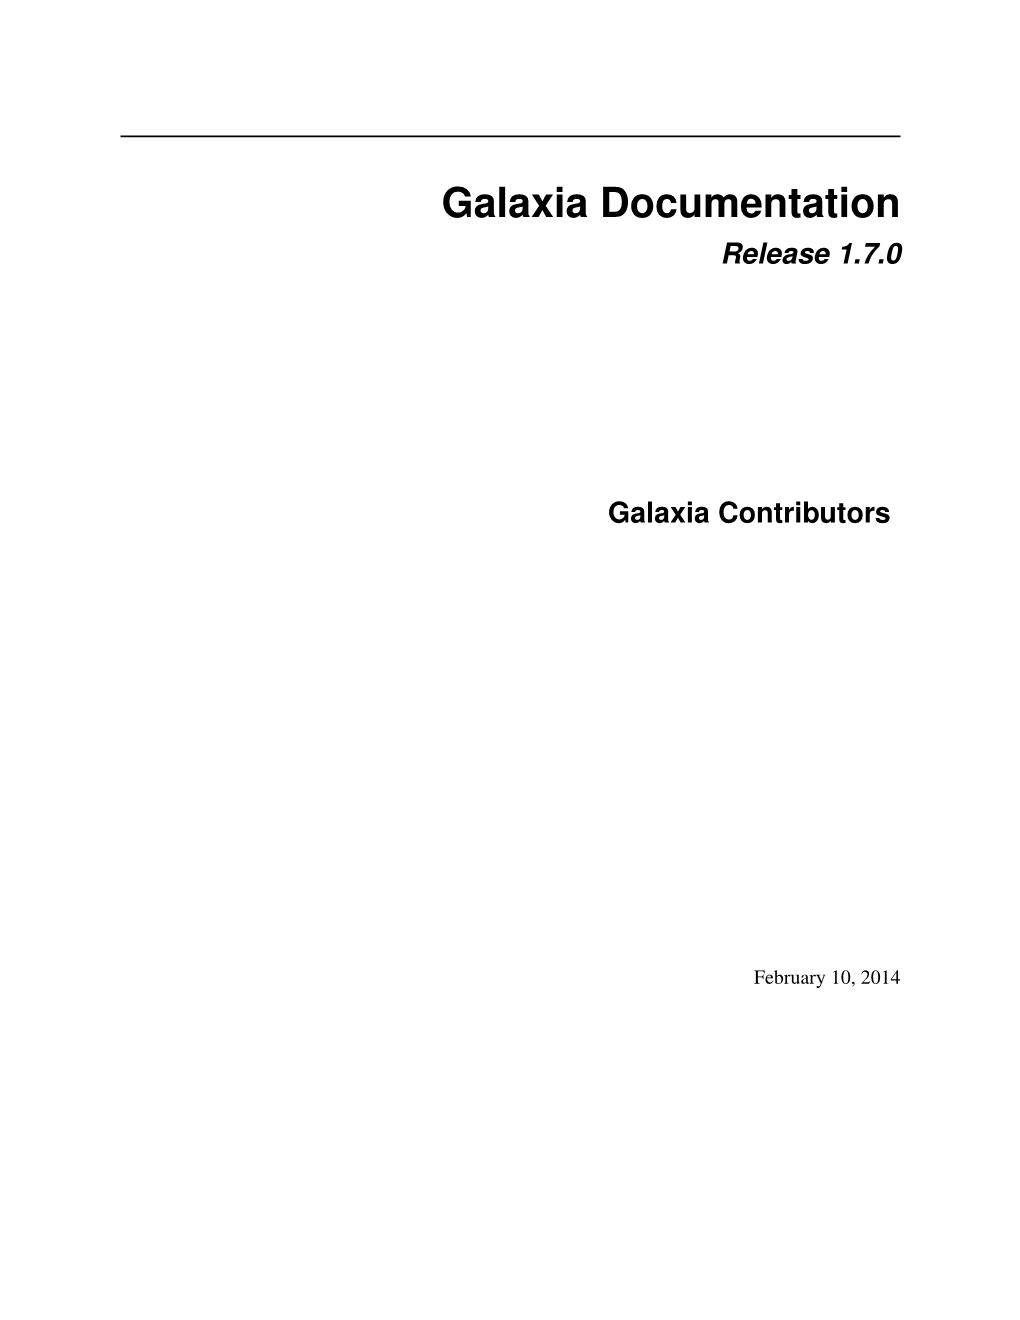 Galaxia Documentation Release 1.7.0